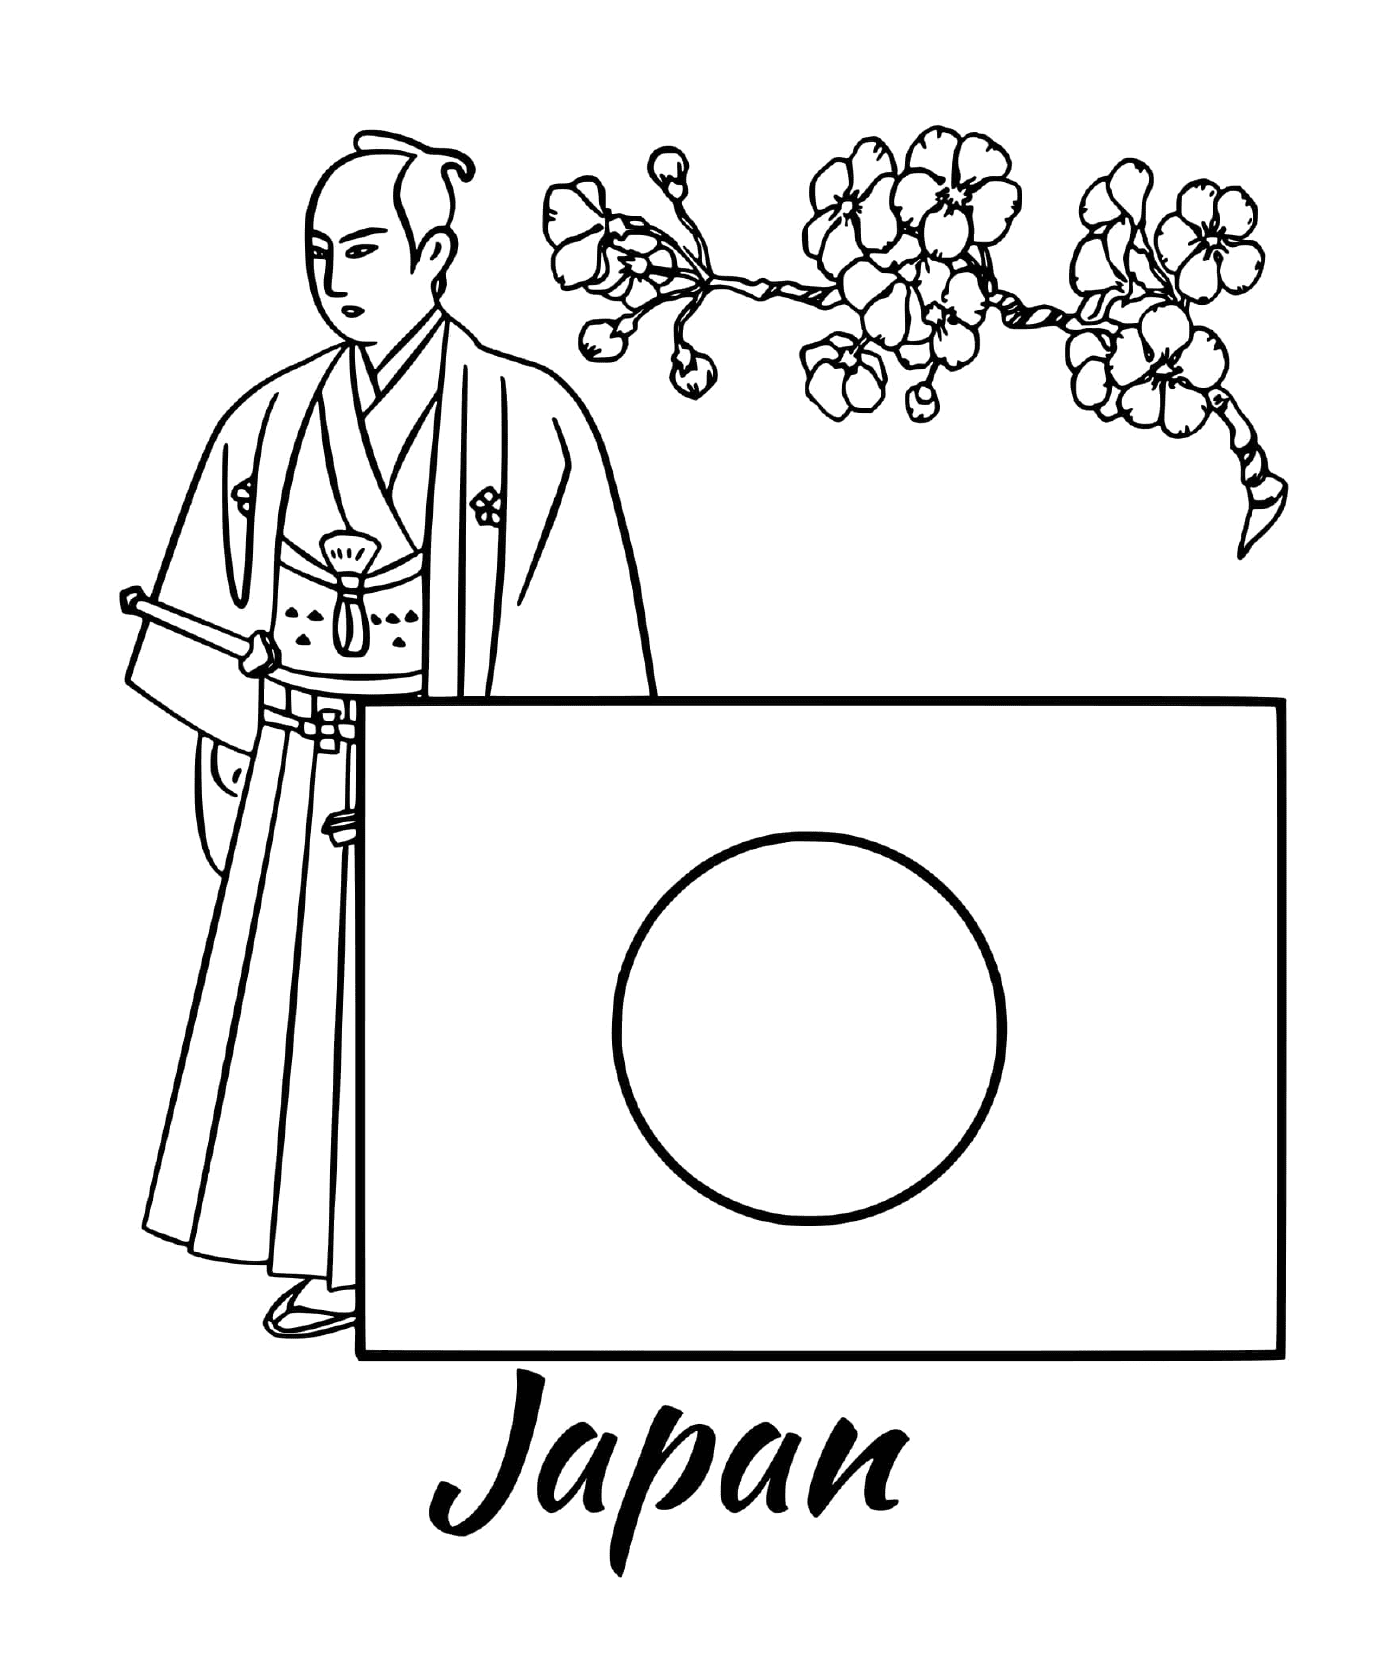  Bandera de Japón con un samurai 